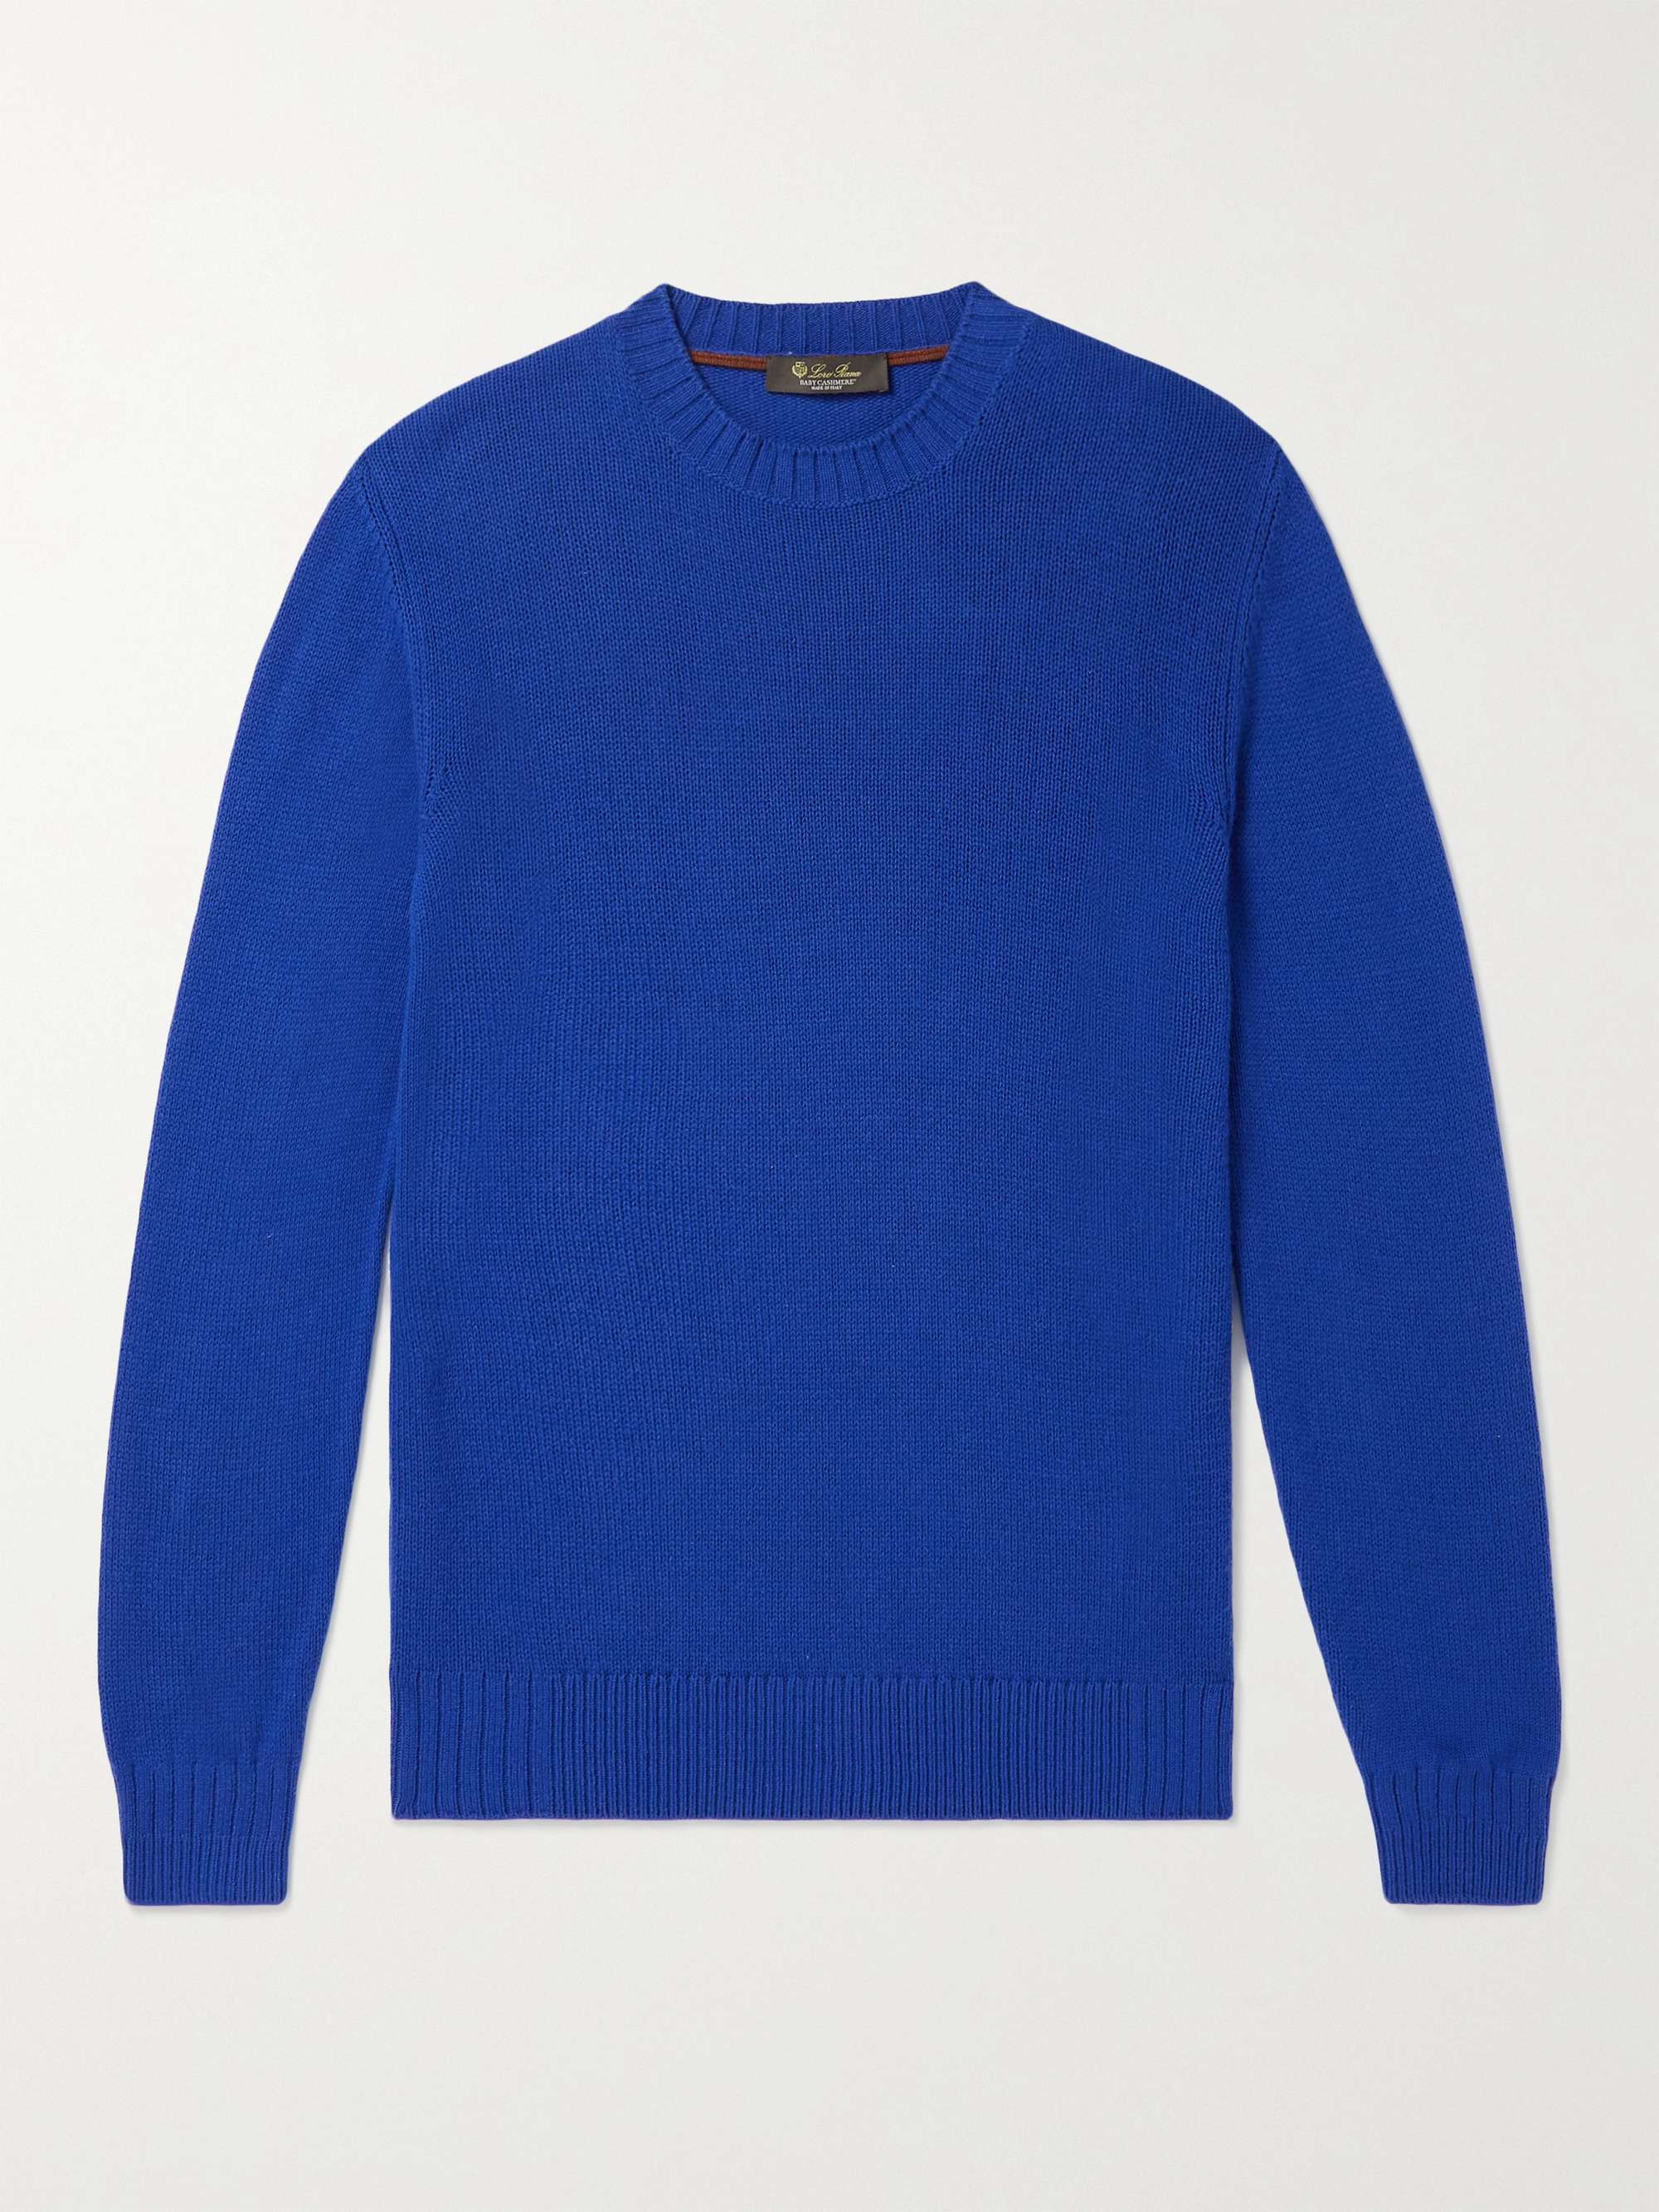 Blue Baby Cashmere Sweater | LORO PIANA | MR PORTER